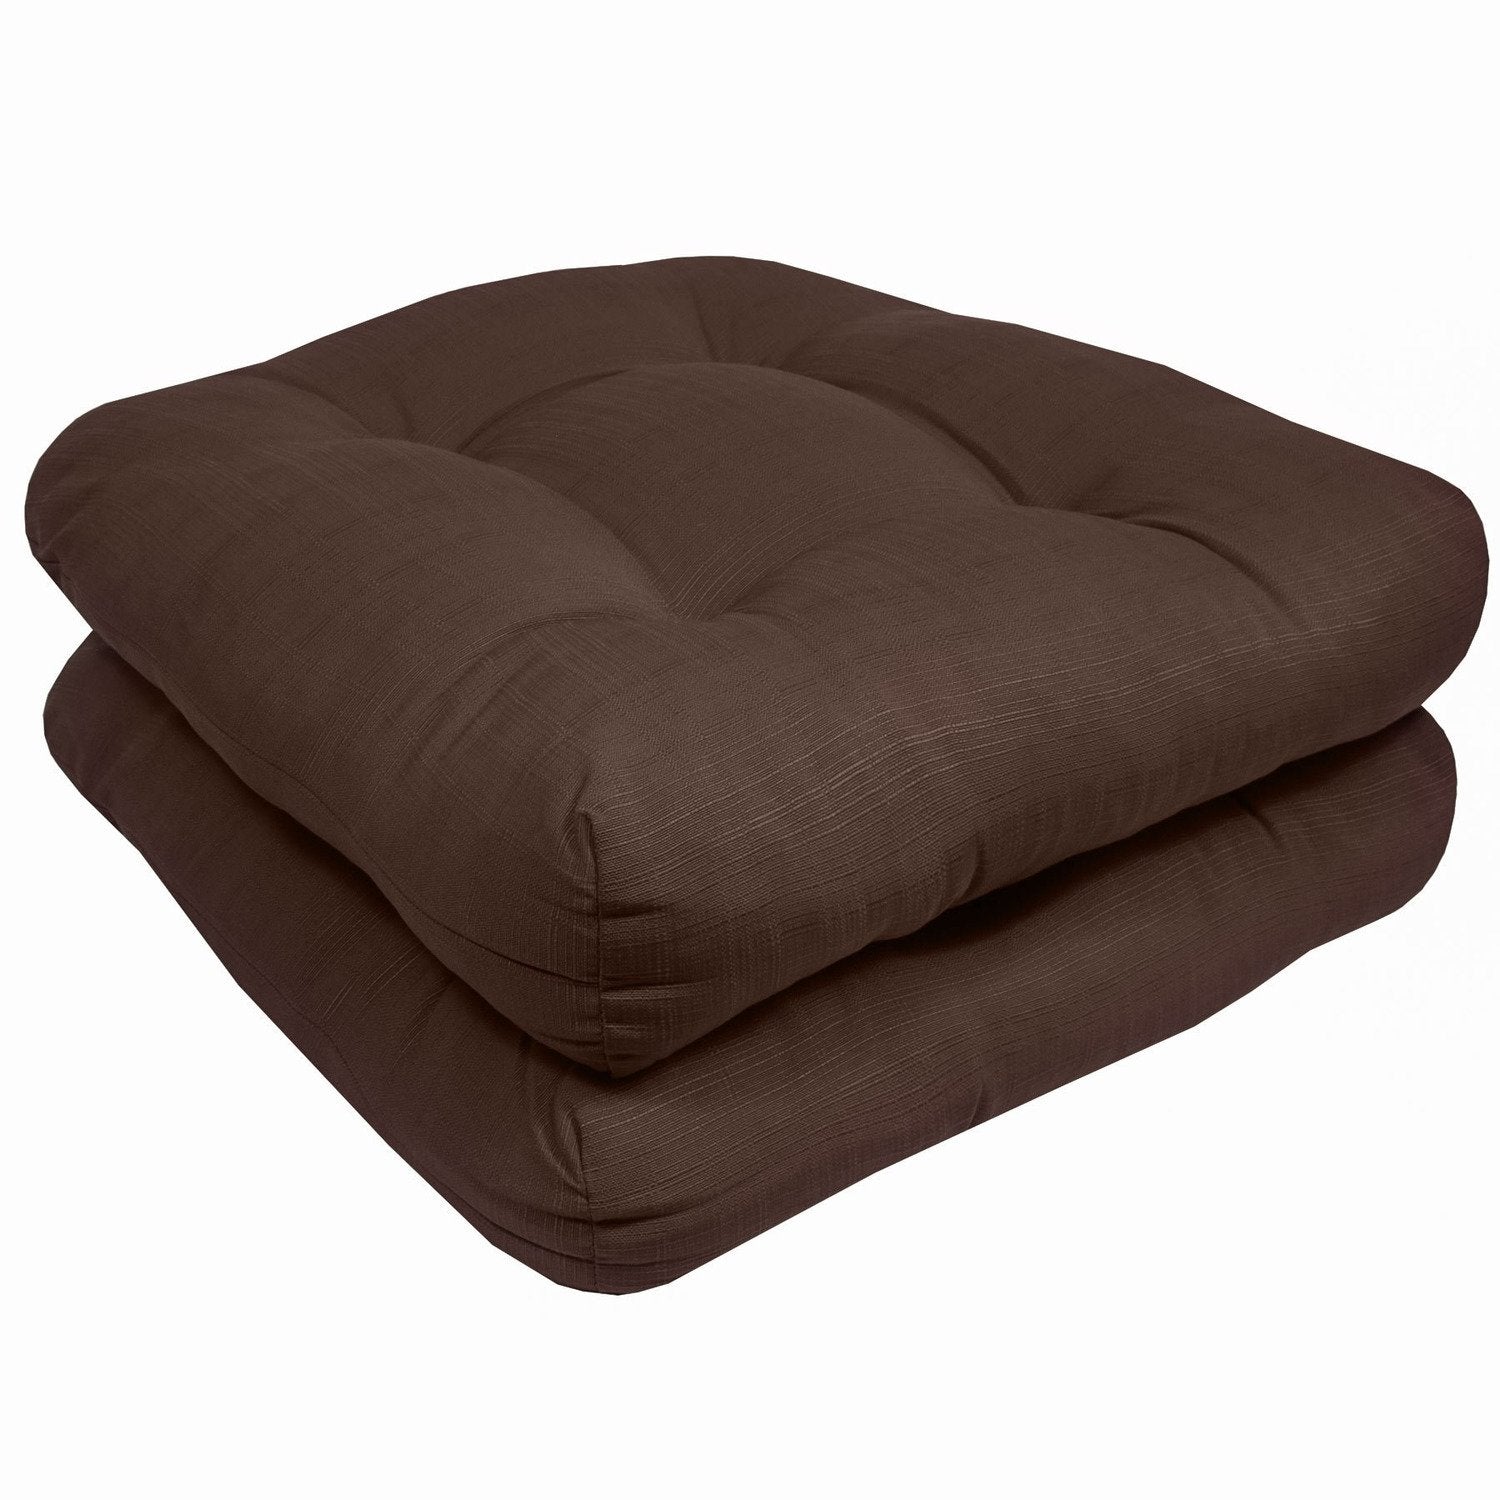 Patio Seat Cushion Set Chocolate 2-Pack - Side